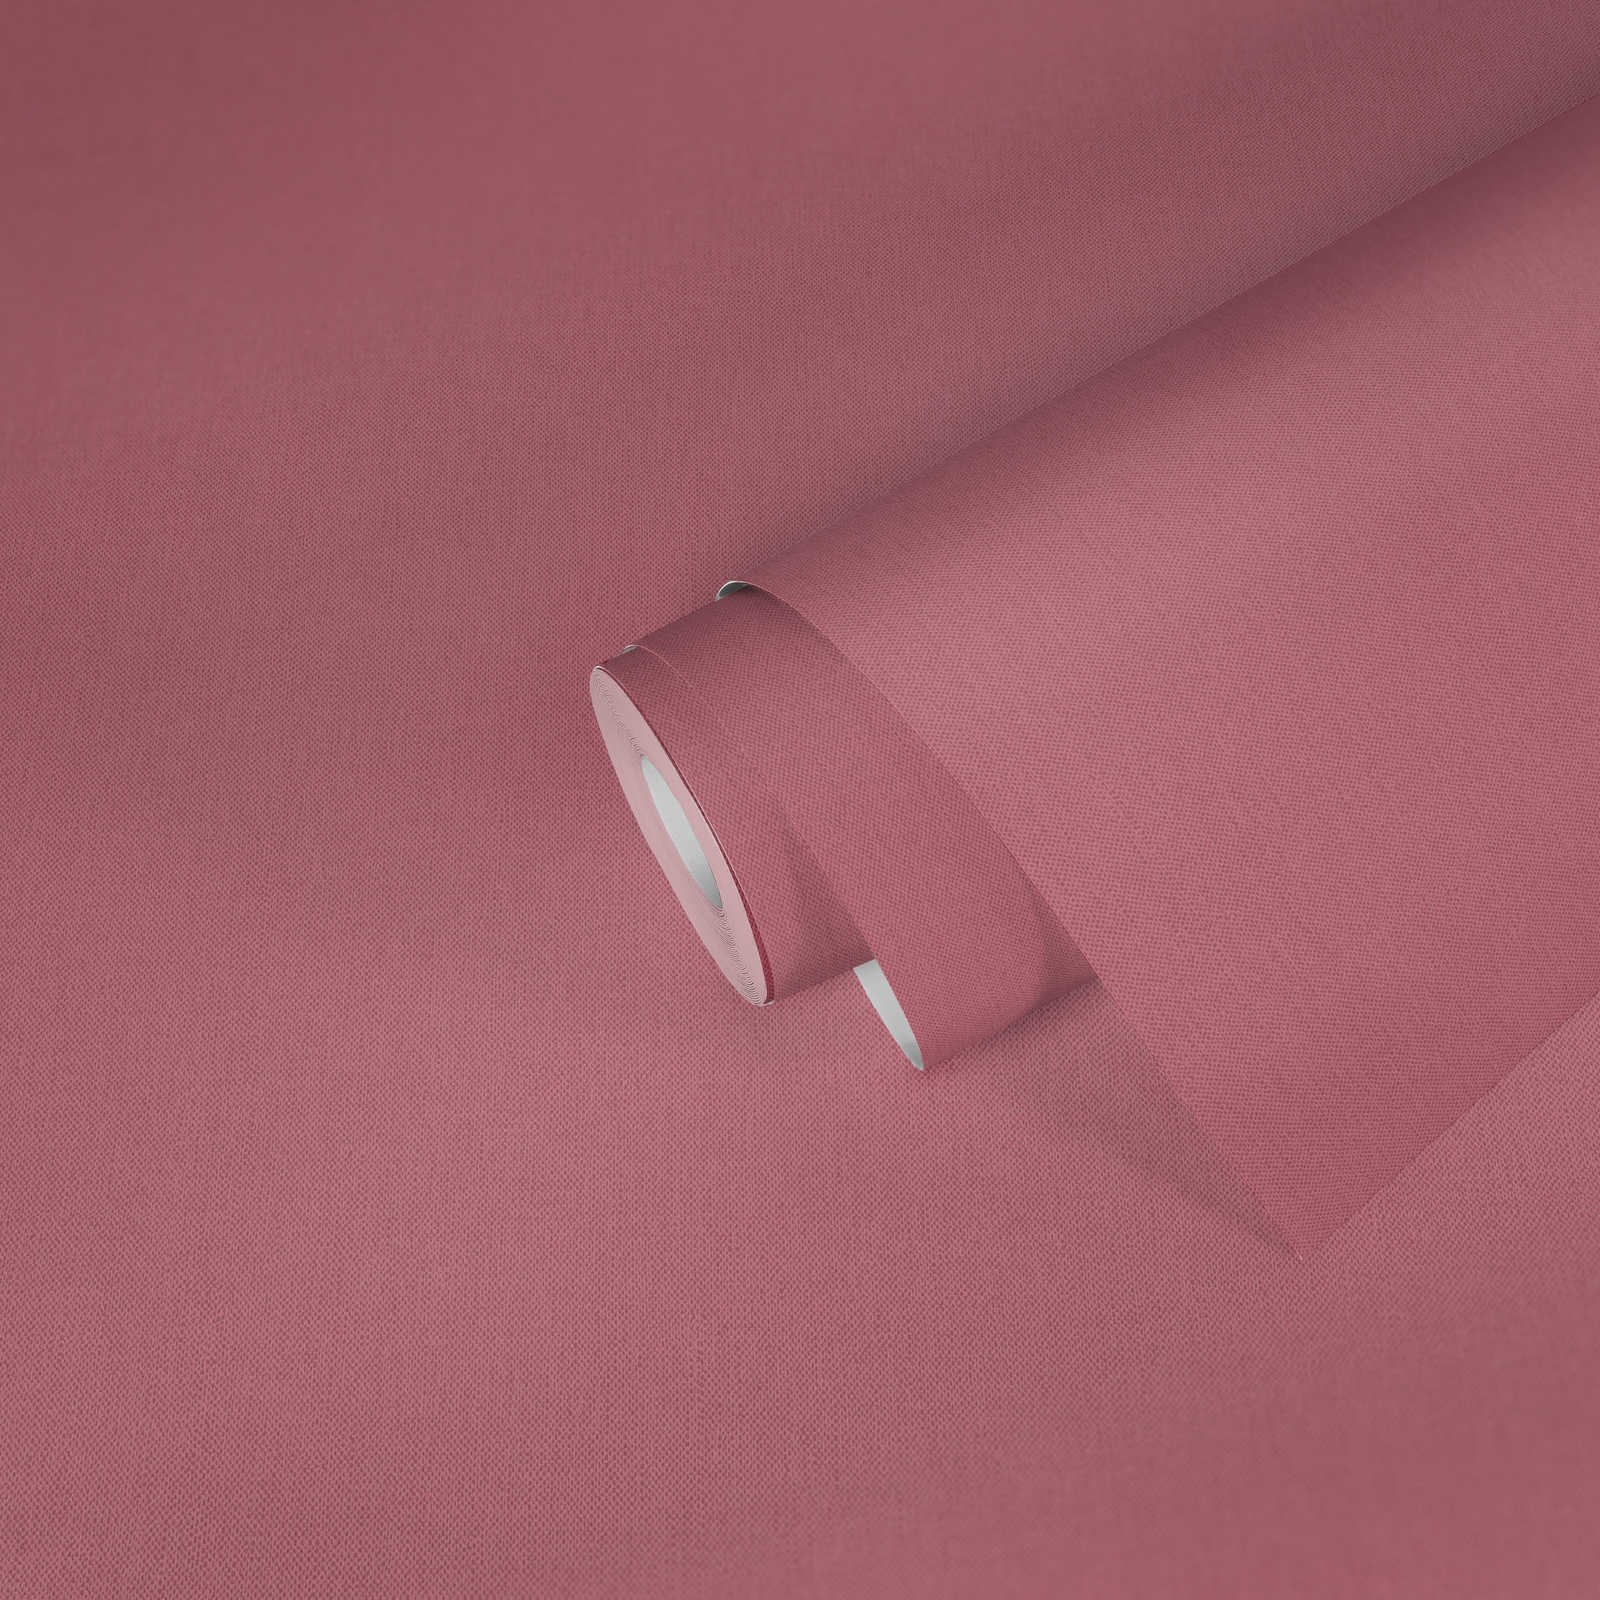             behang oudroze uni, mat oppervlak & textielstructuur - roze
        